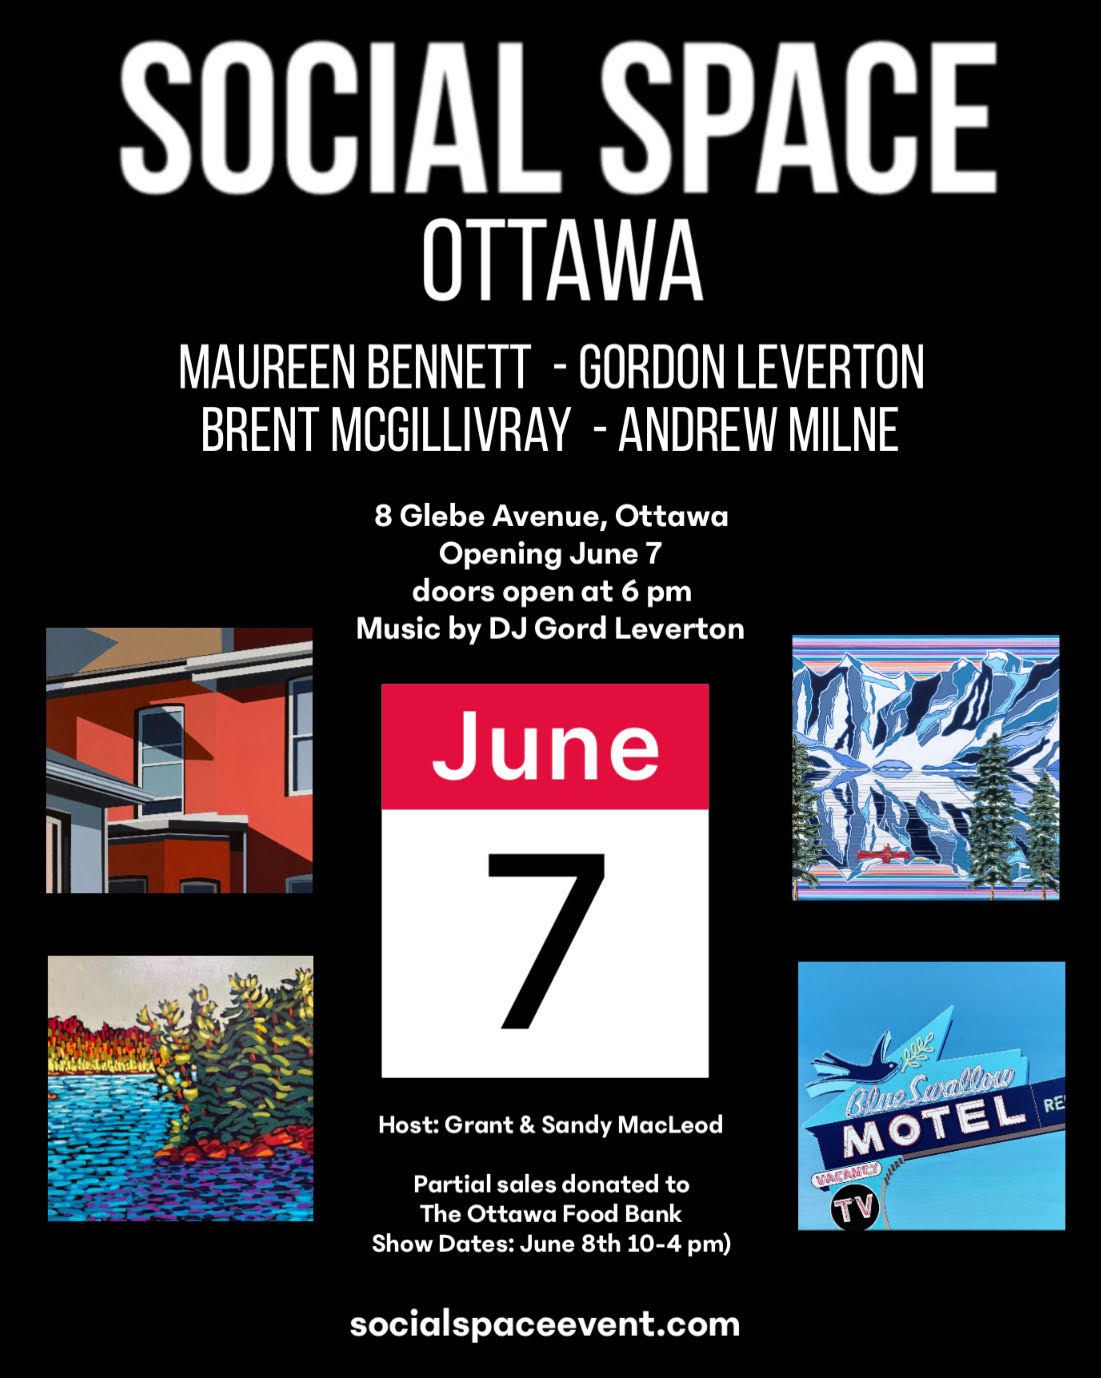 SOCIAL SPACE I Ottawa - Pop Up Art Event - Opening Nite: June 7th at 181 Glebe Avenue, Ottawa